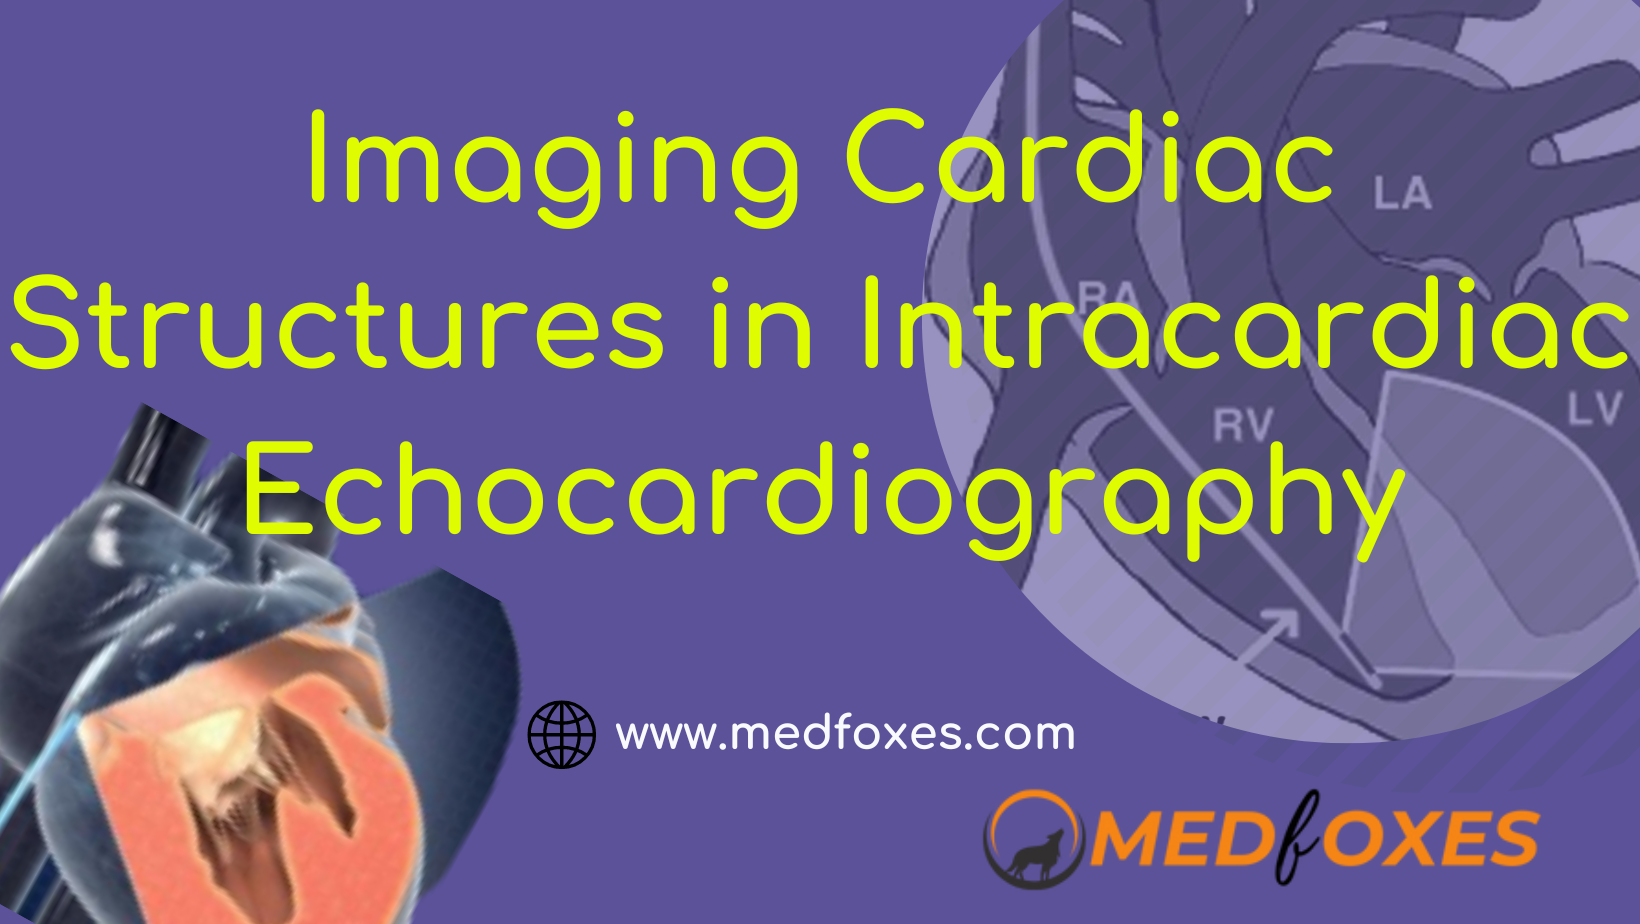 Cardiac Structures in Intracardiac Echocardiography